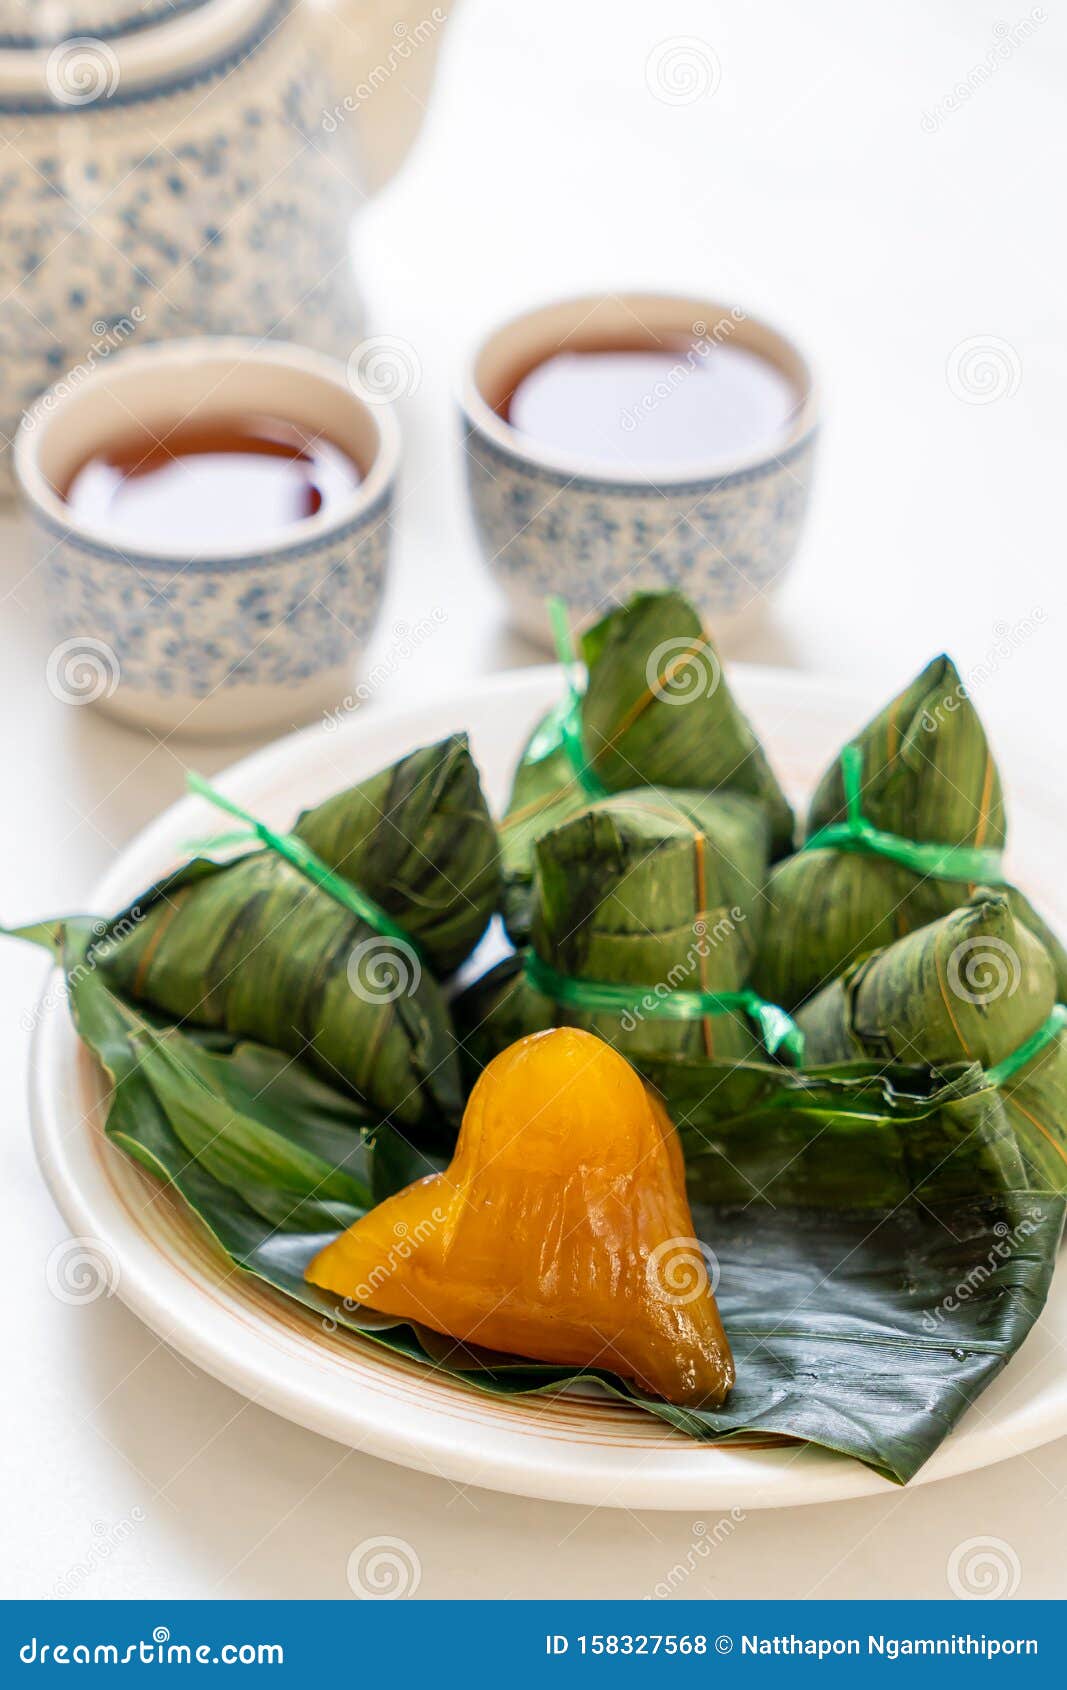 Zongzi or Traditional Chinese Sticky Rice Dumplings Stock Photo - Image ...